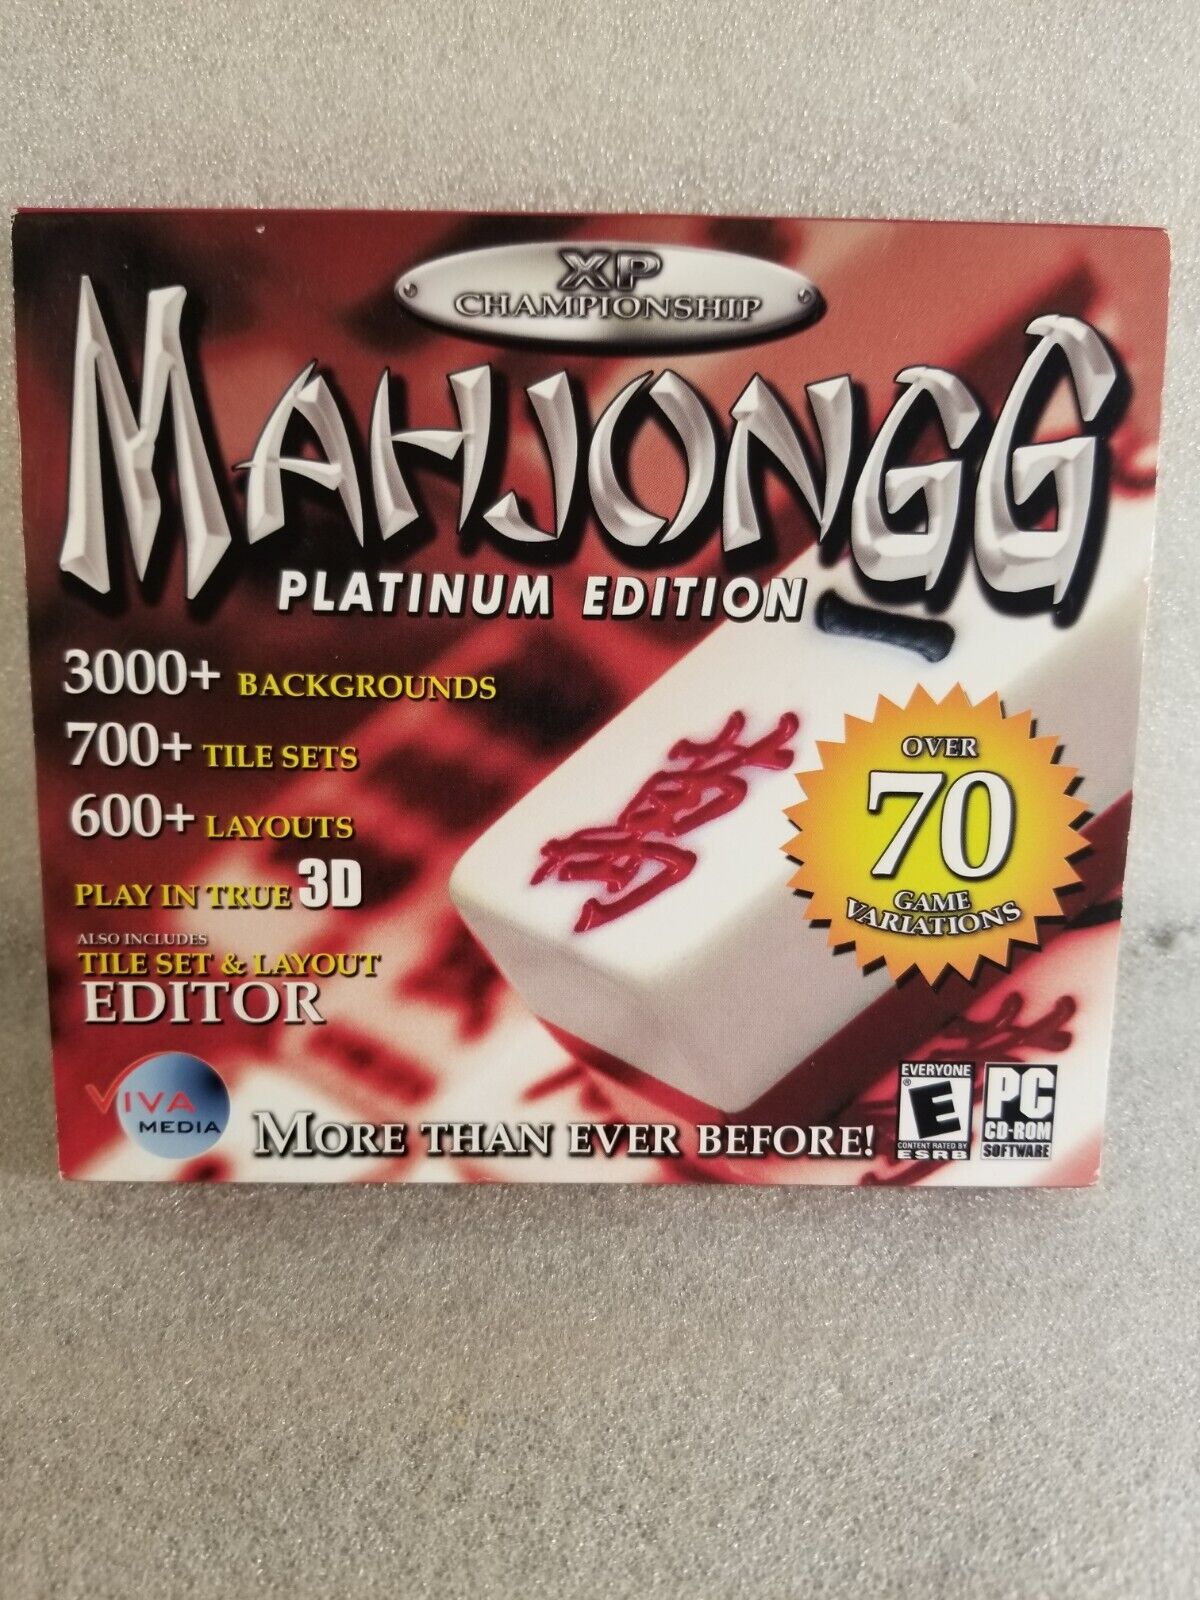 Mahjongg Platinum Edition PC 2004 CD-ROM - 70+ game variations